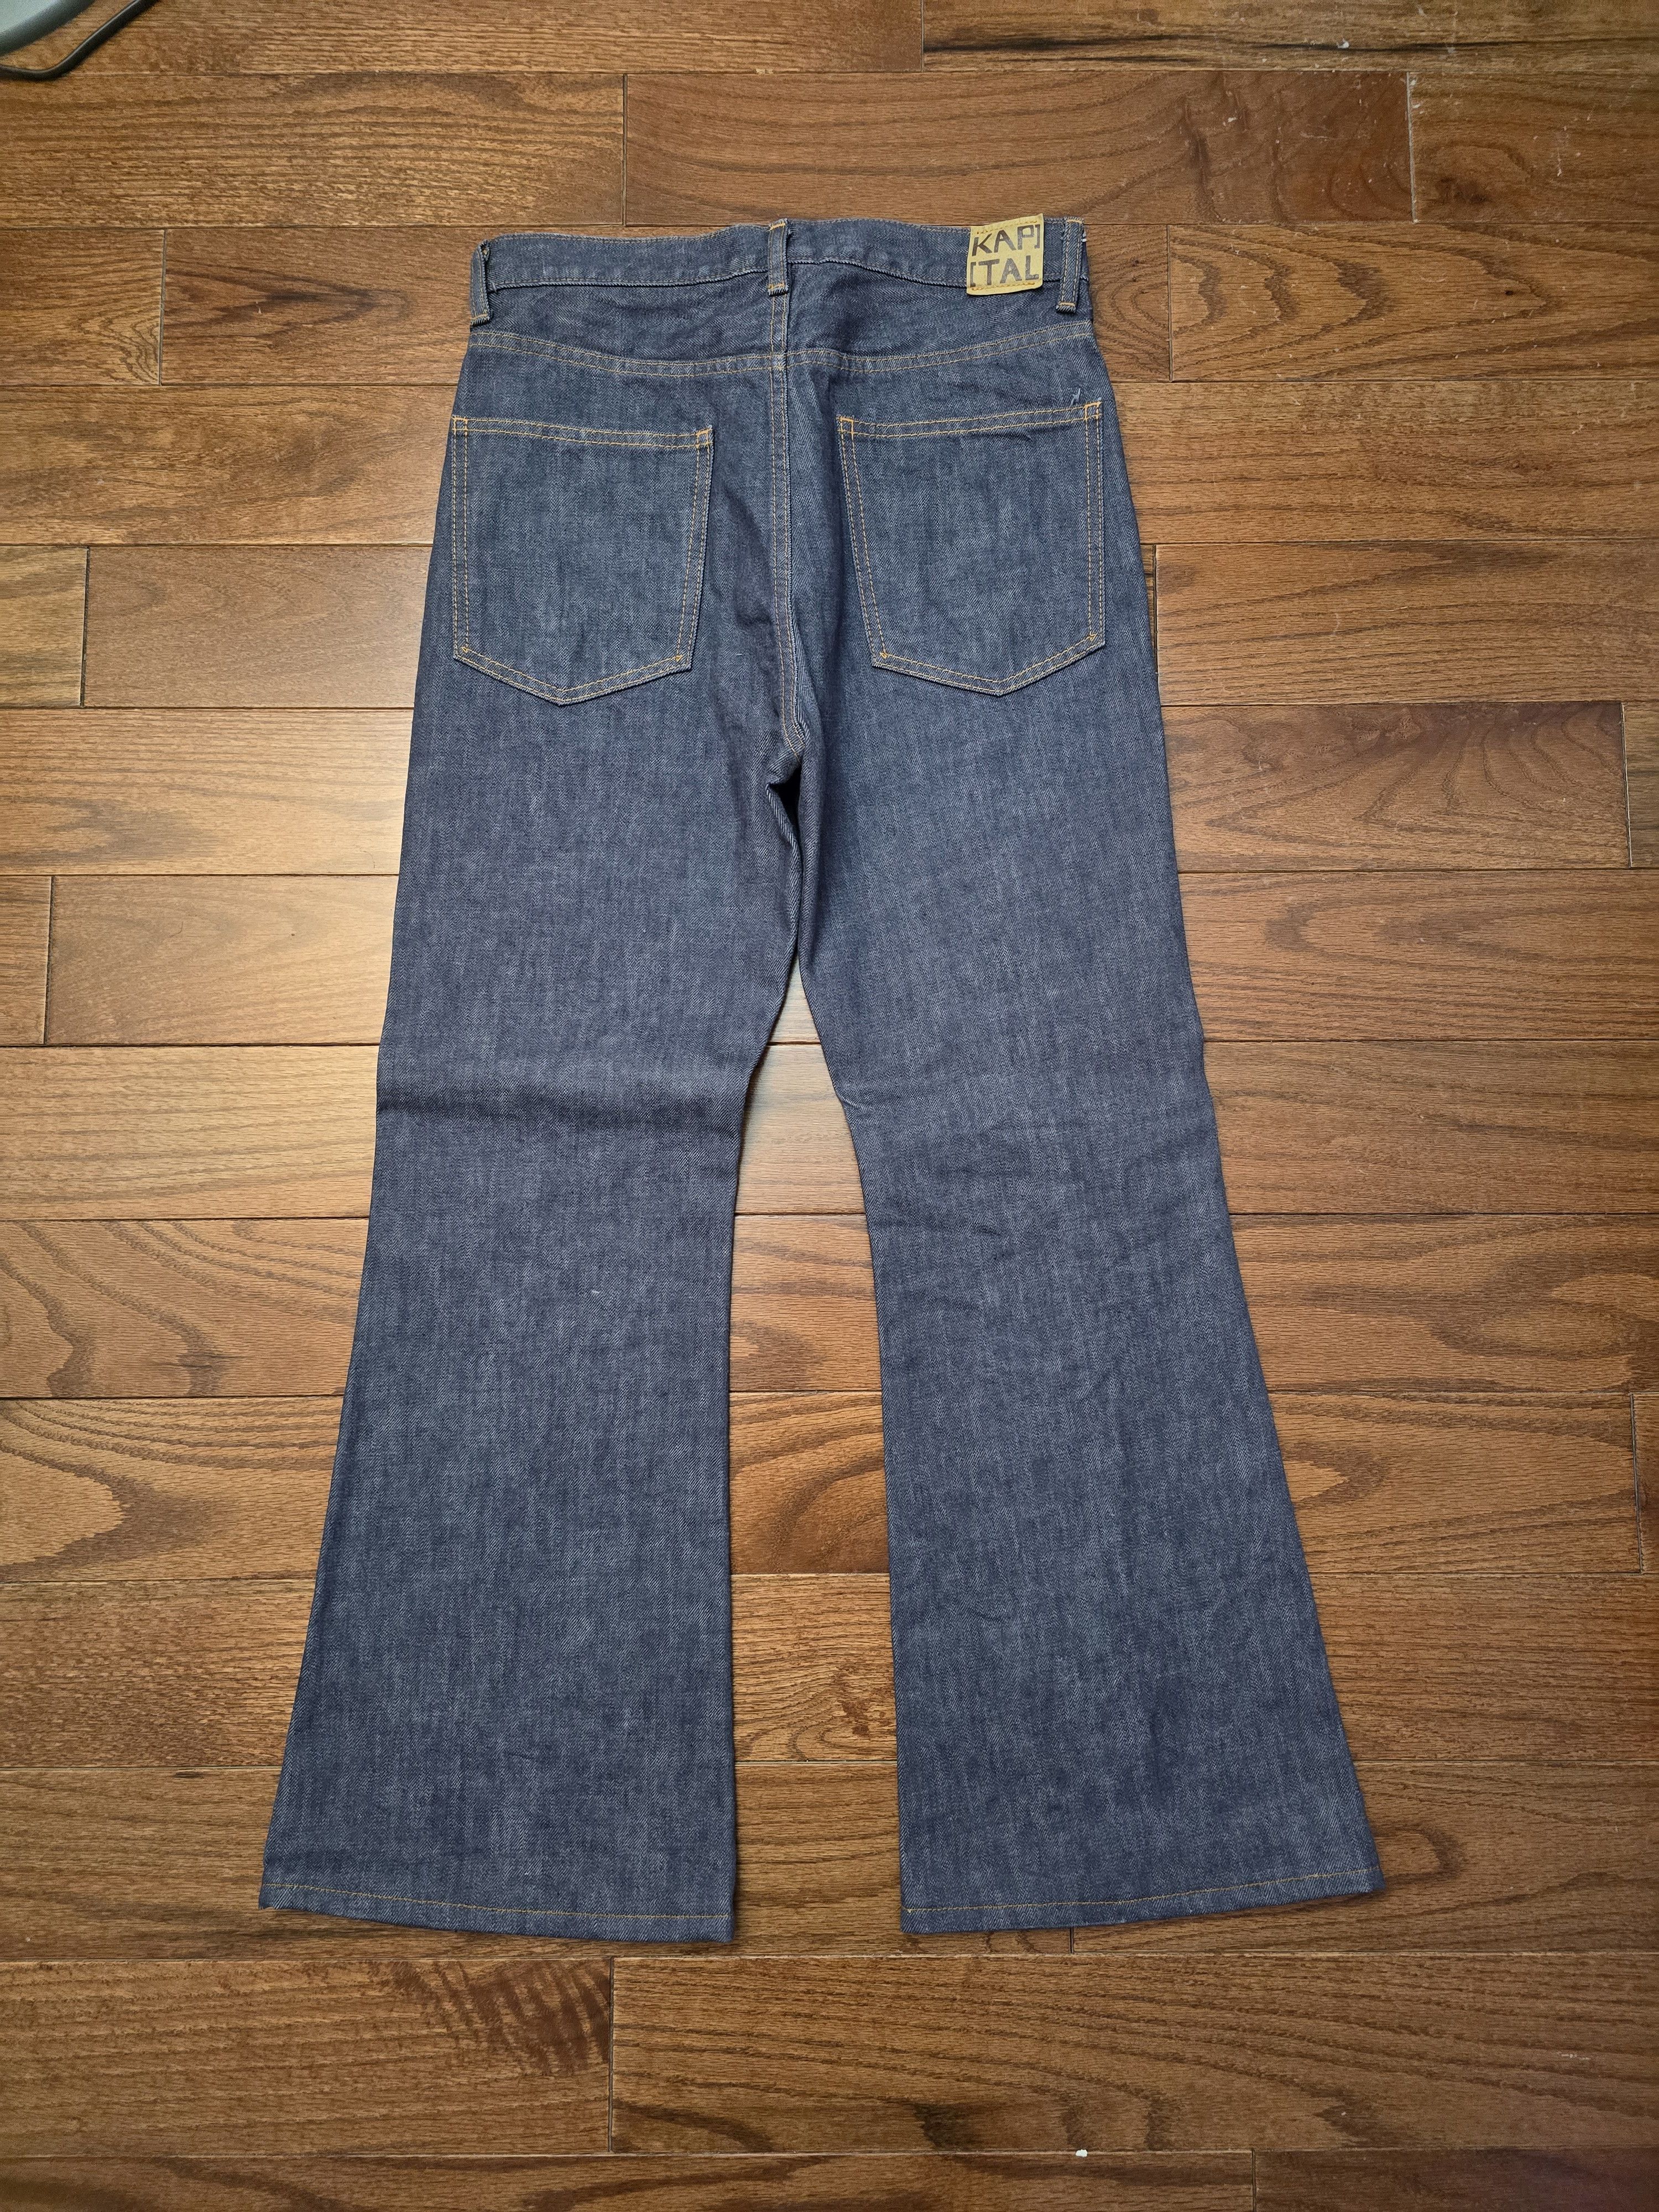 Kapital Kapital Indigo Dyed Flare Jeans Size US 32 / EU 48 - 4 Thumbnail